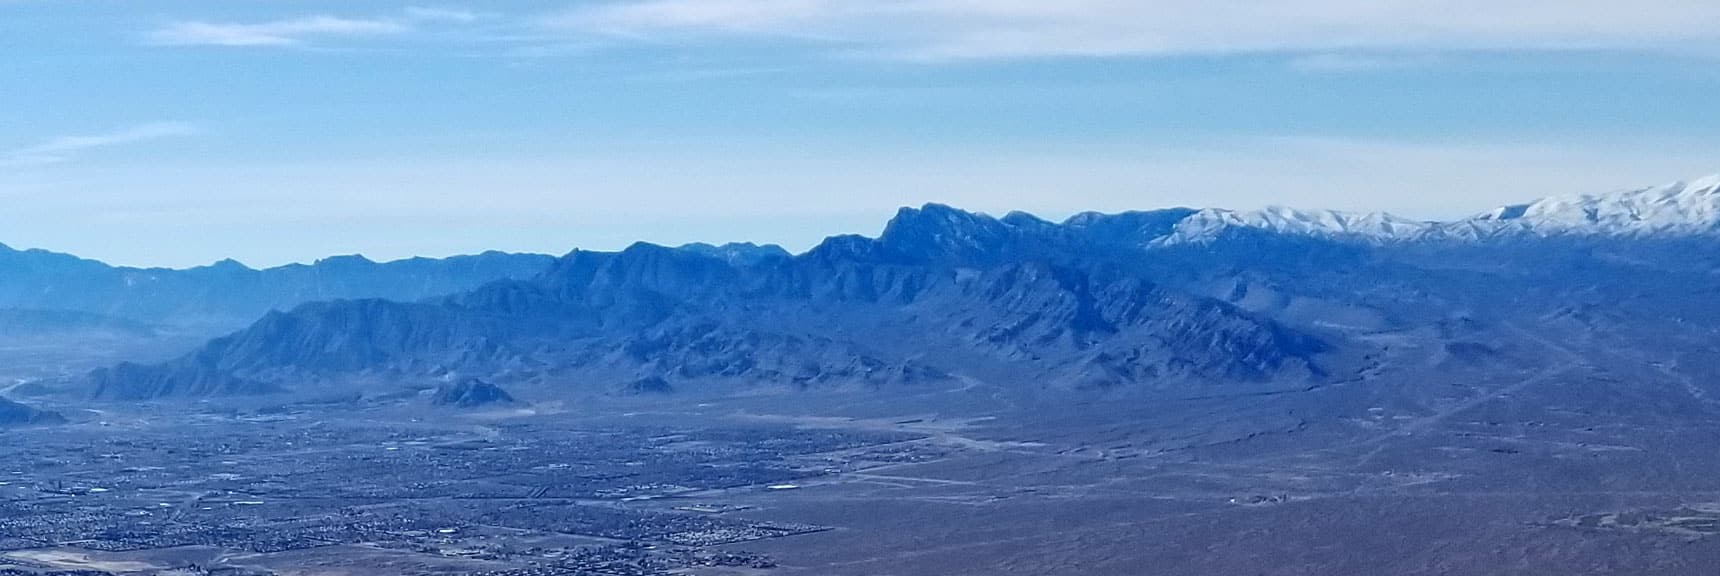 La Madre Mountain Viewed from Gass Peak Summit, Nevada